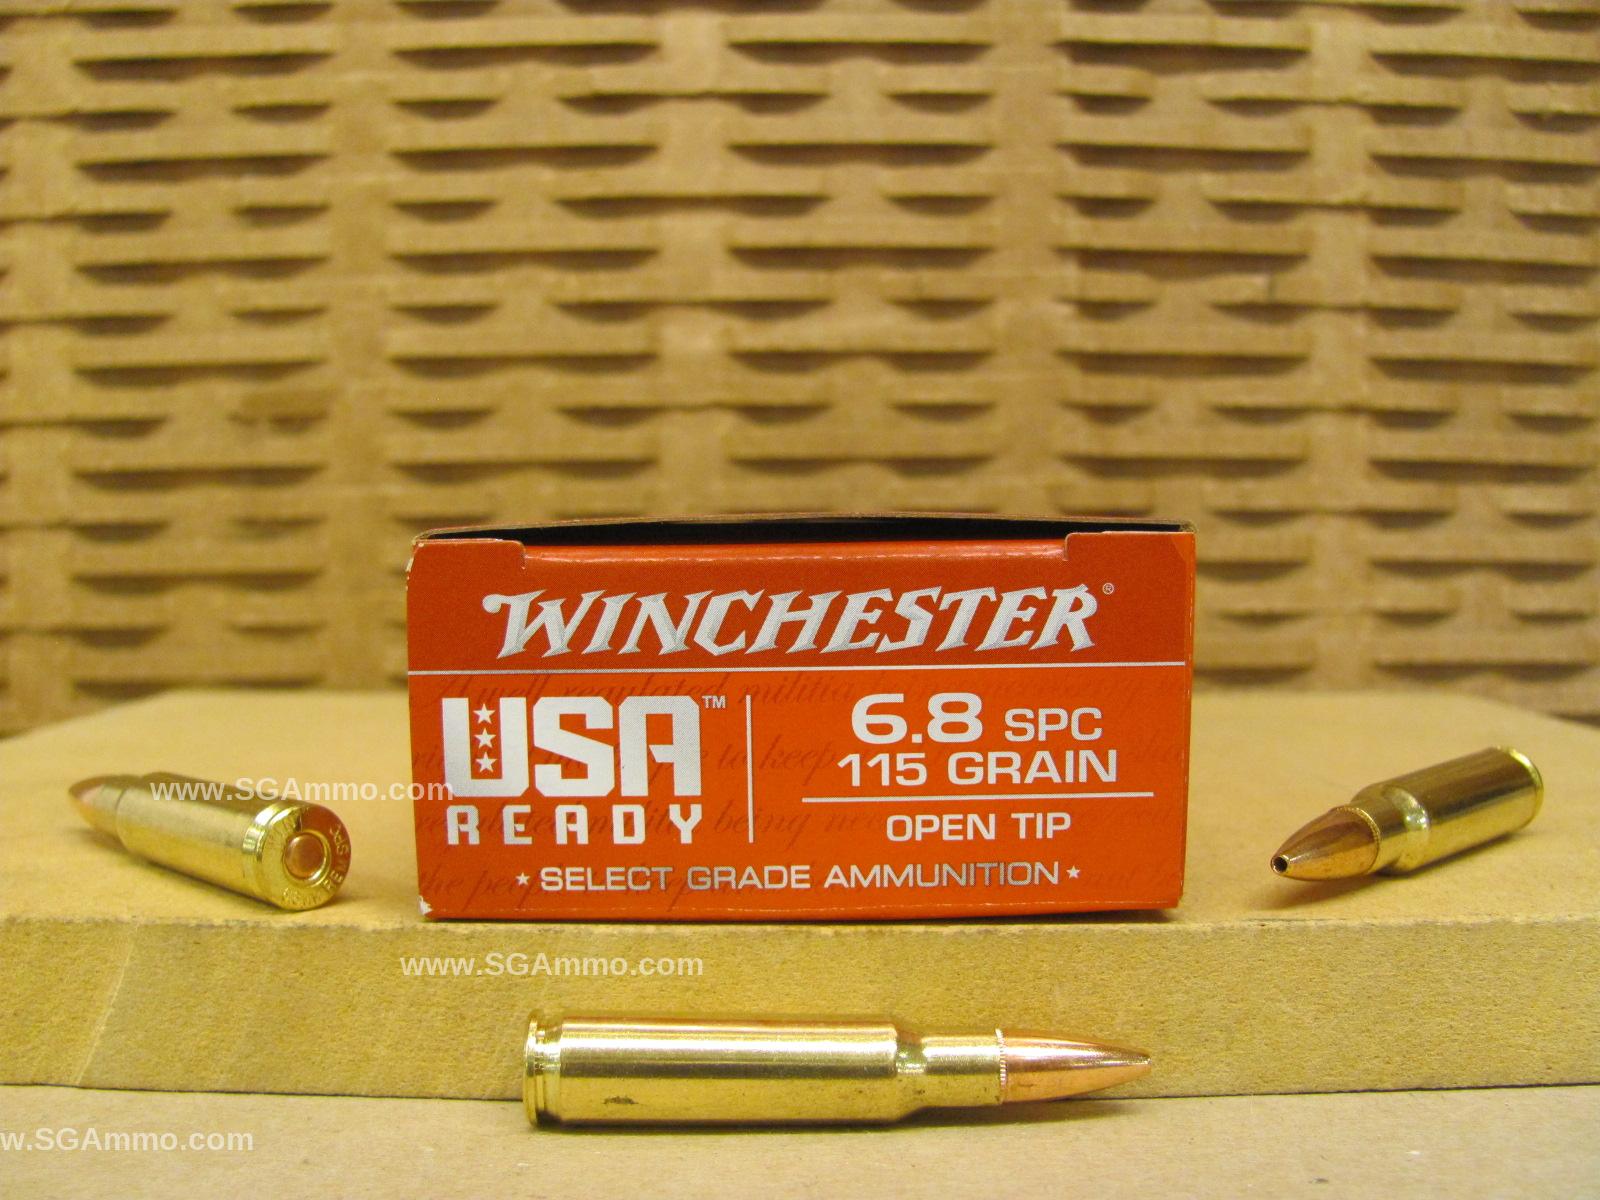 200 Round Case - 6.8 SPC 115 Grain Open Tip Winchester Ammo - RED68SPC